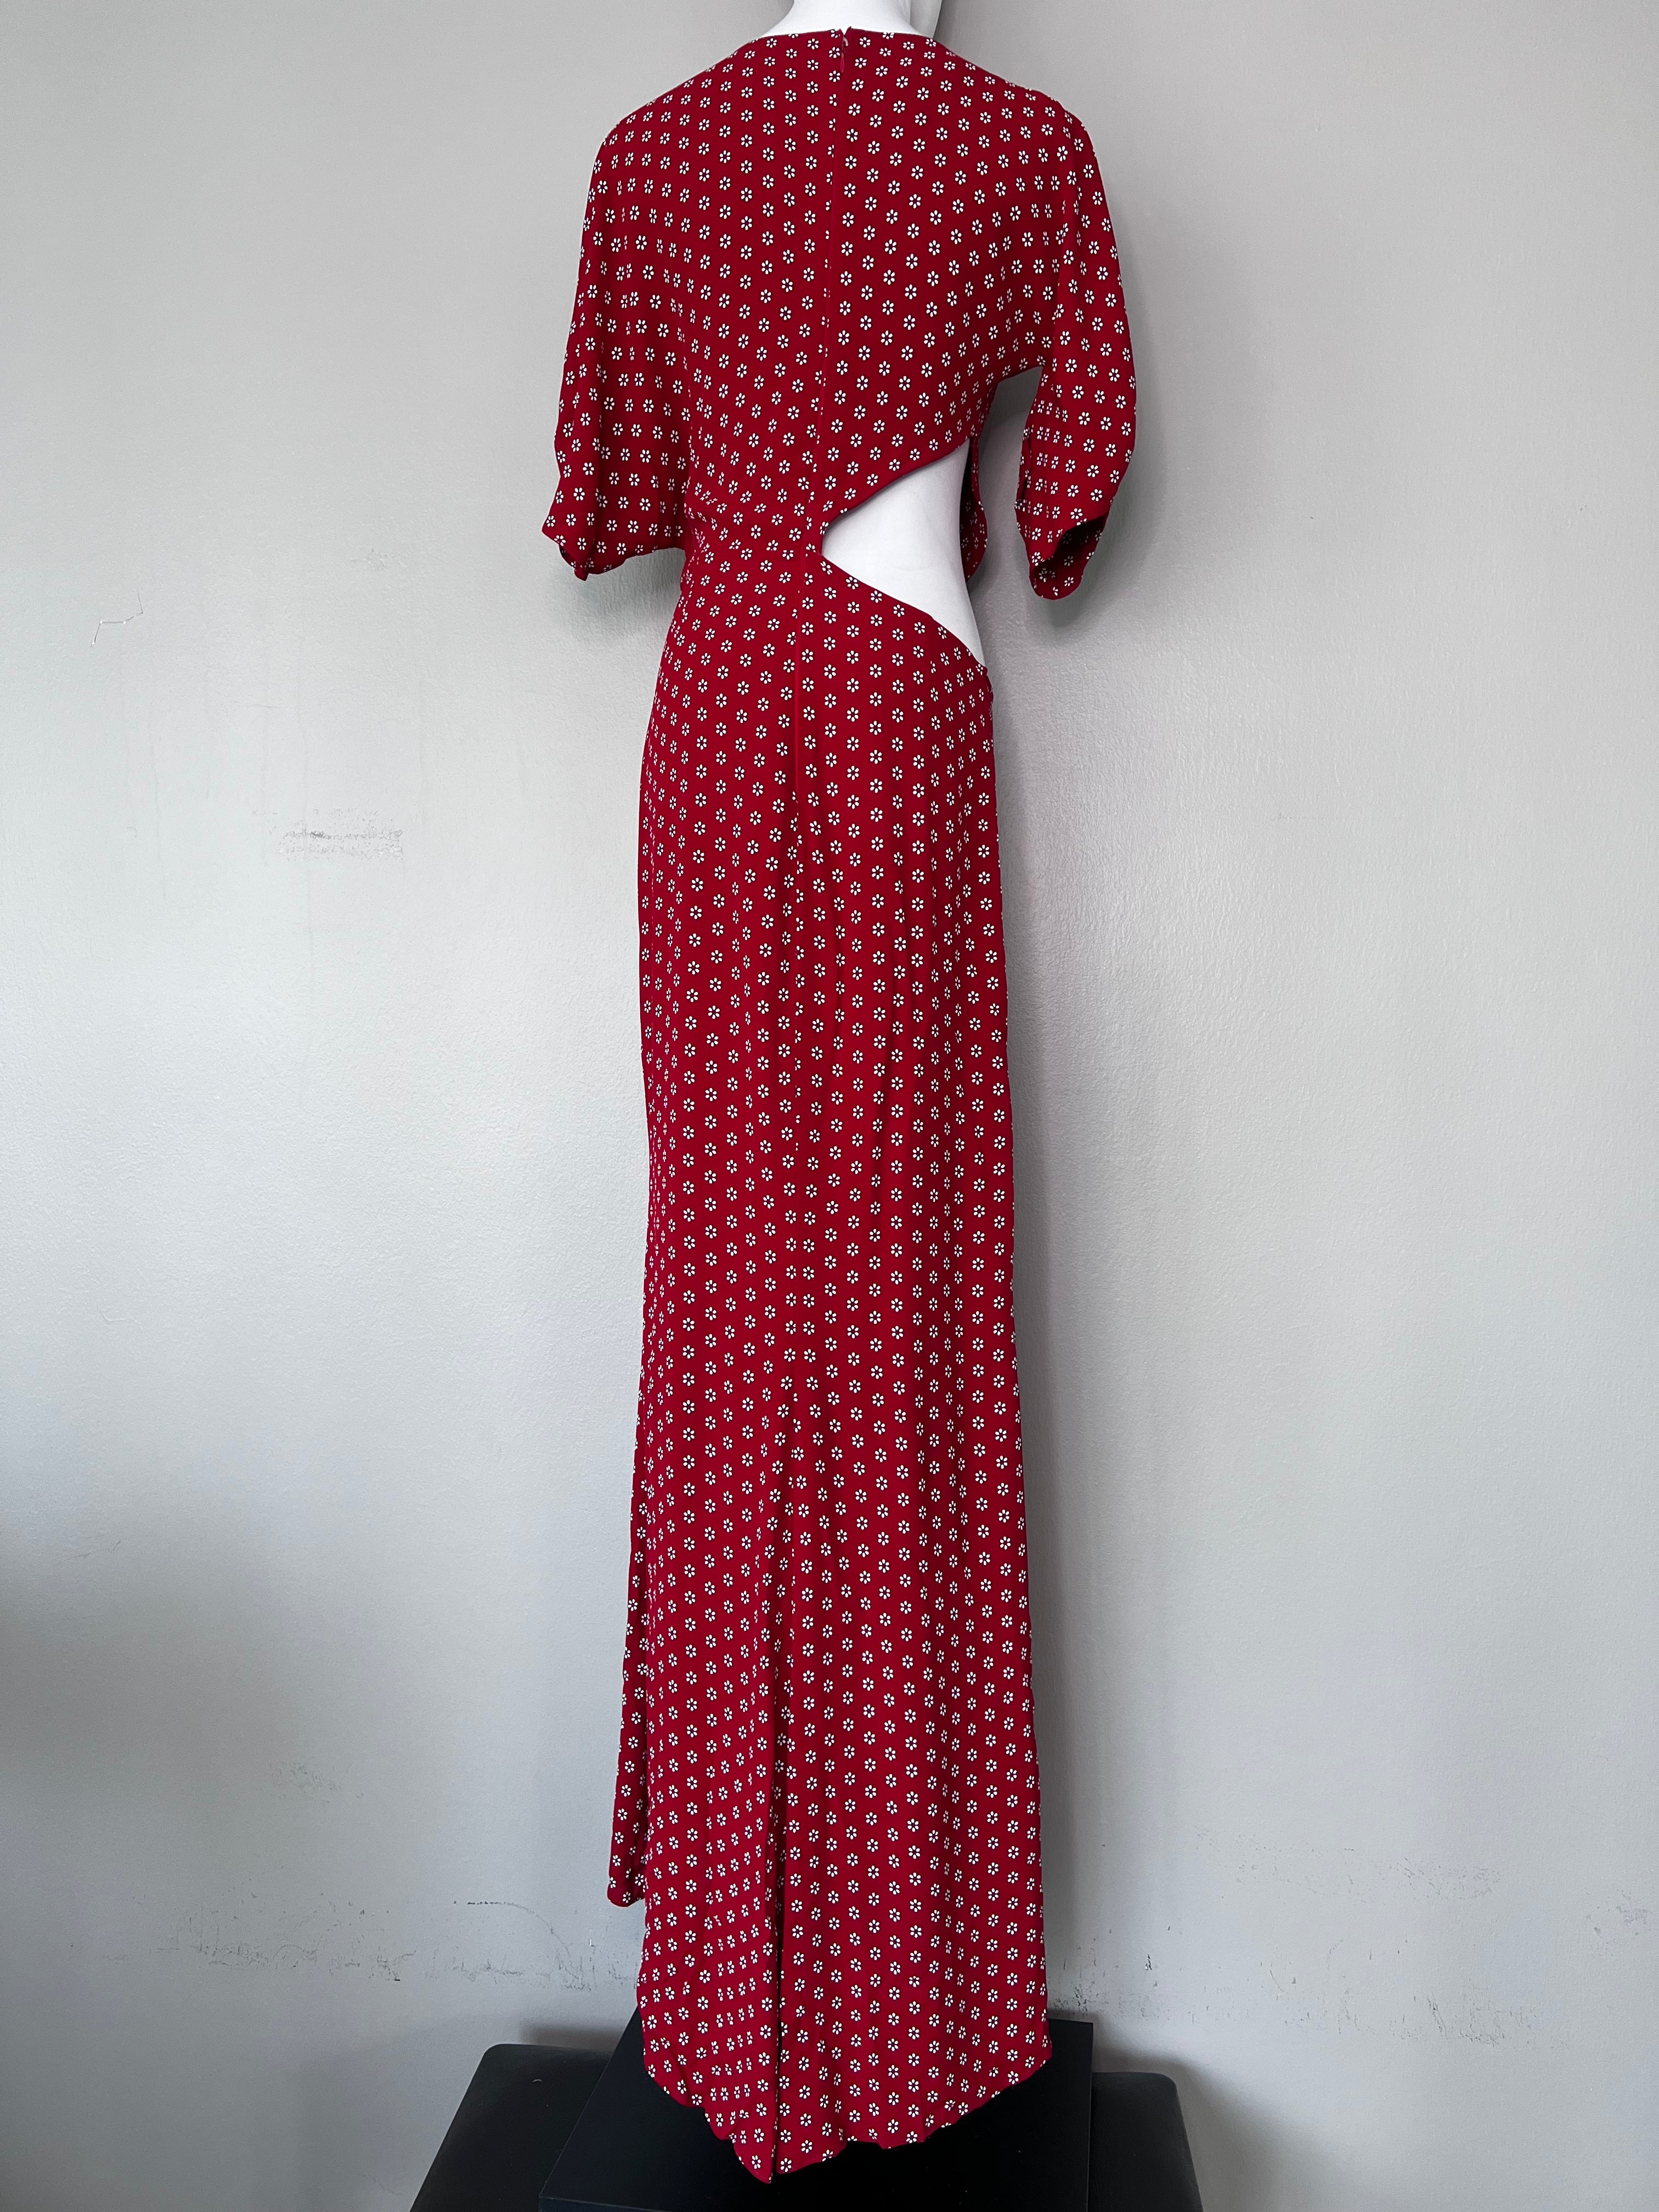 Floral red long dress slit with side cut design - SCREAM